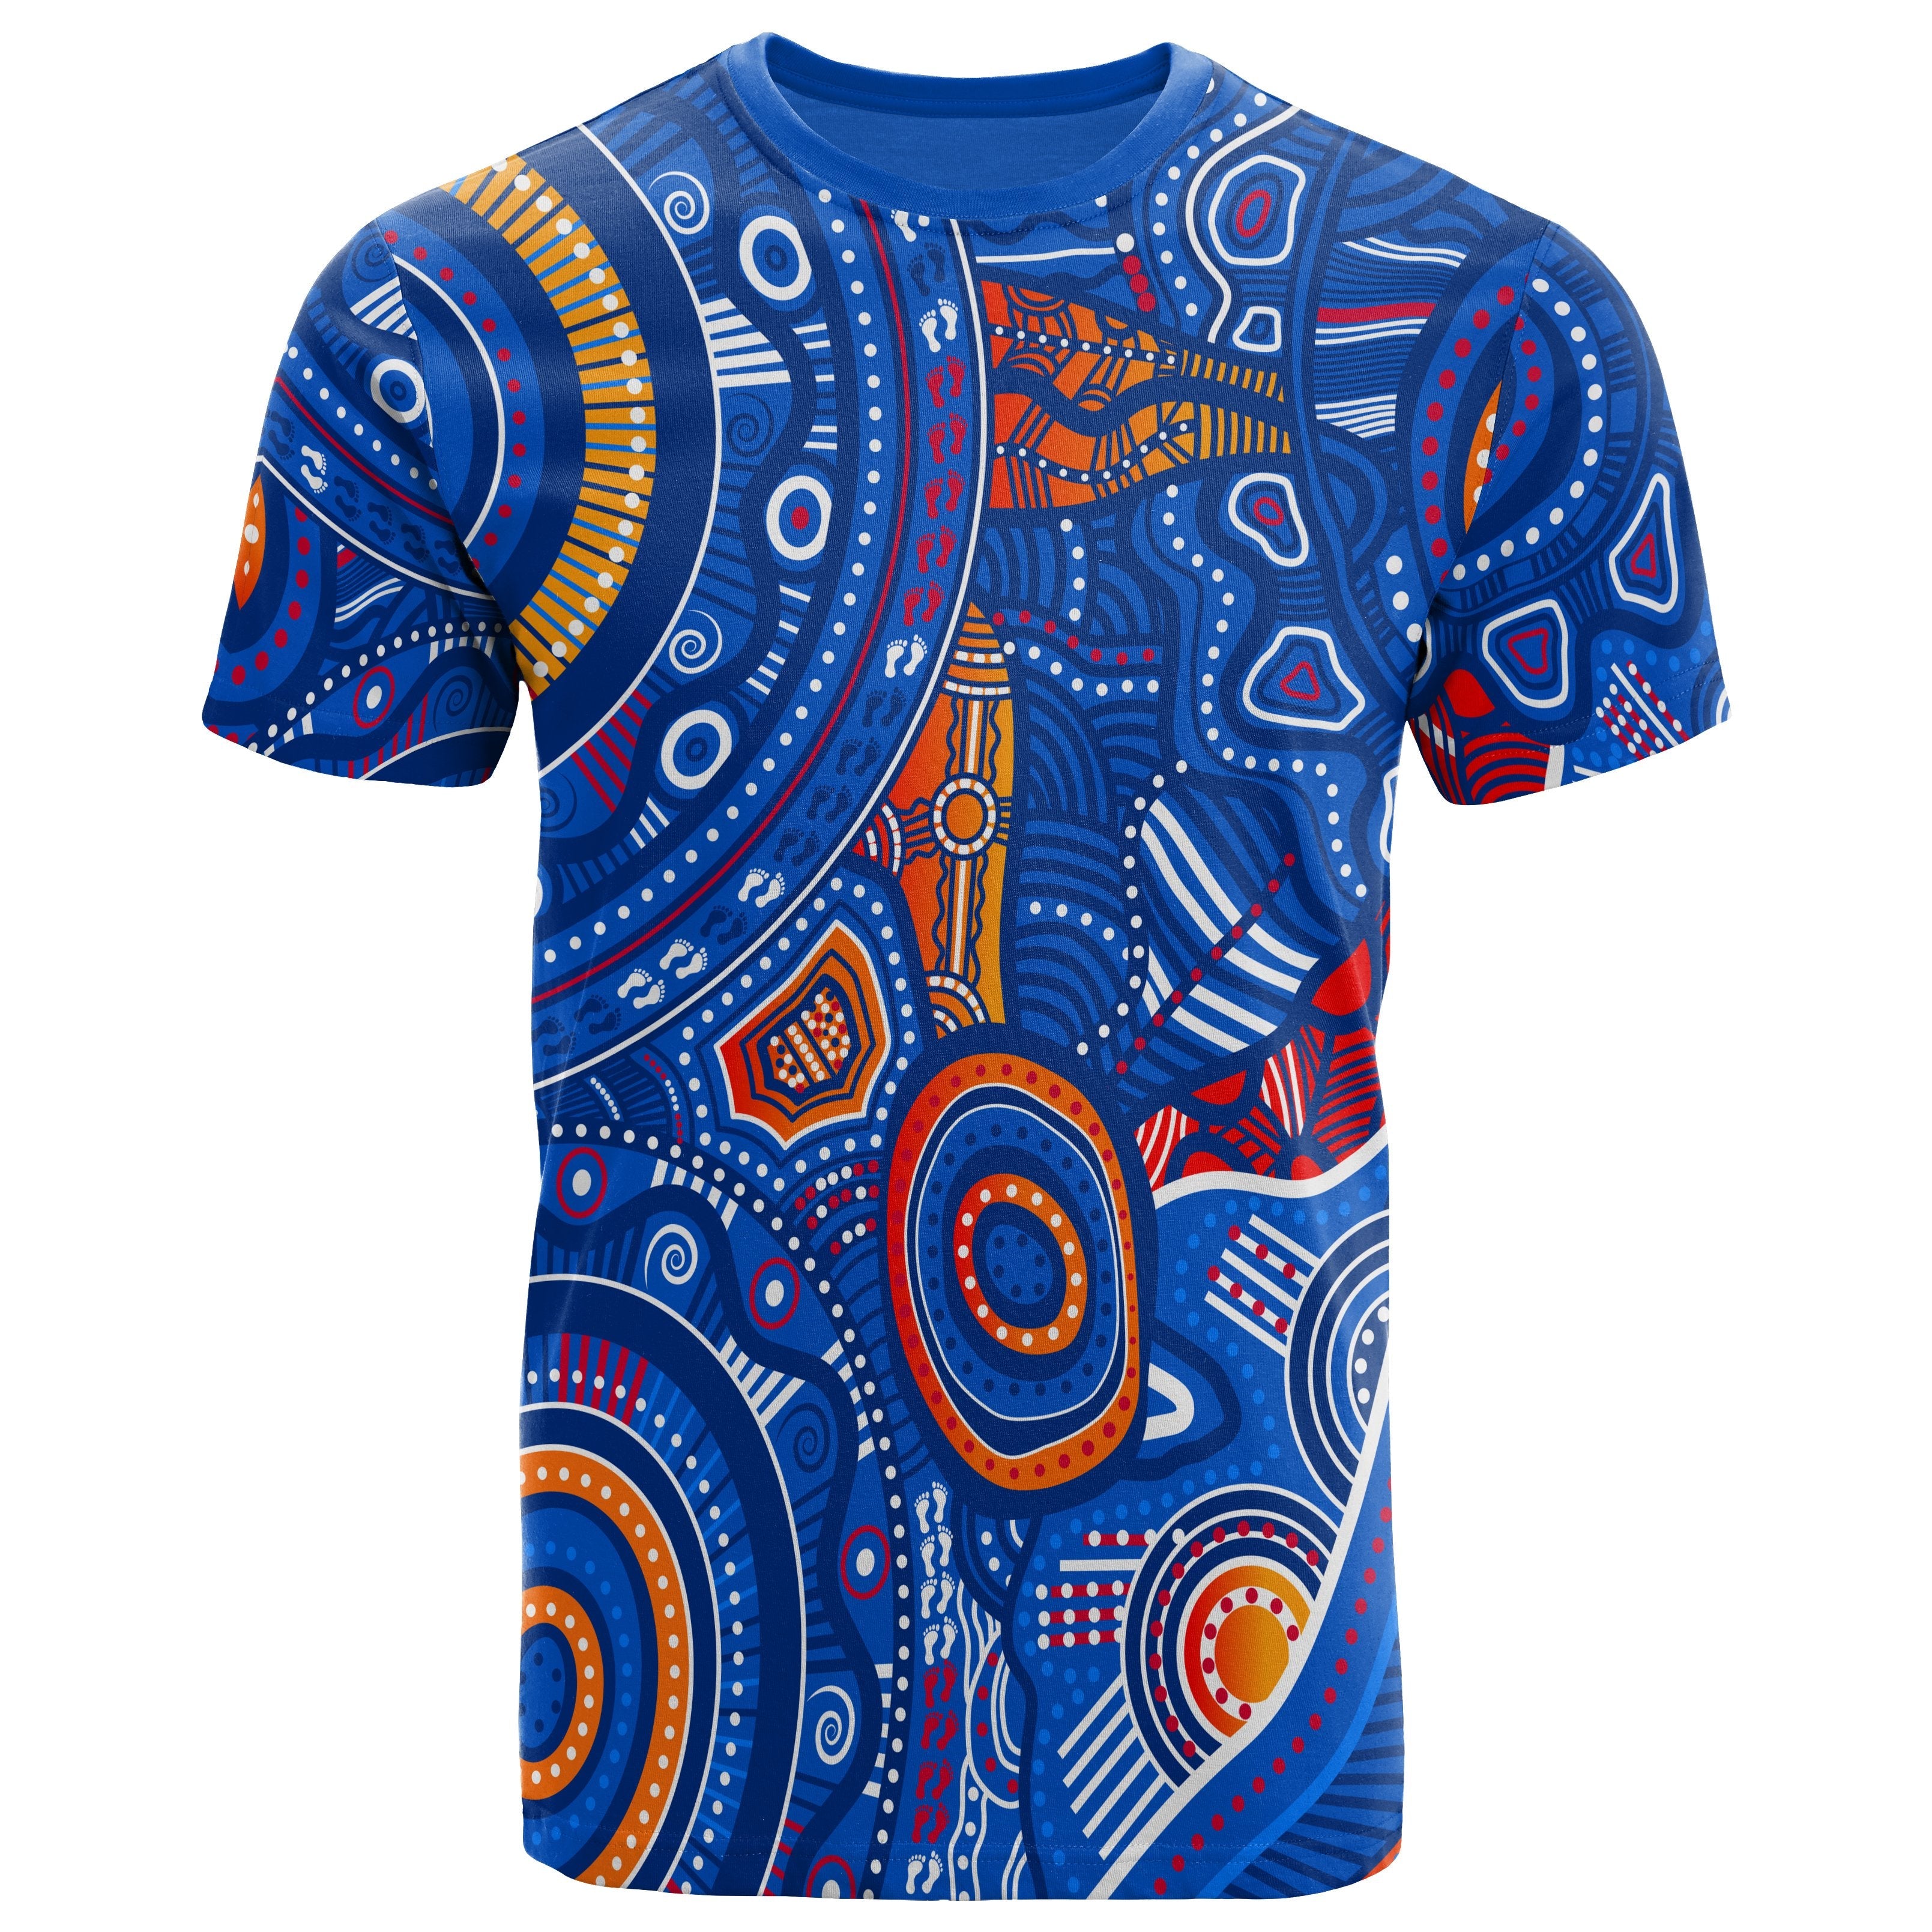 aboriginal-t-shirt-indigenous-footprint-patterns-blue-color